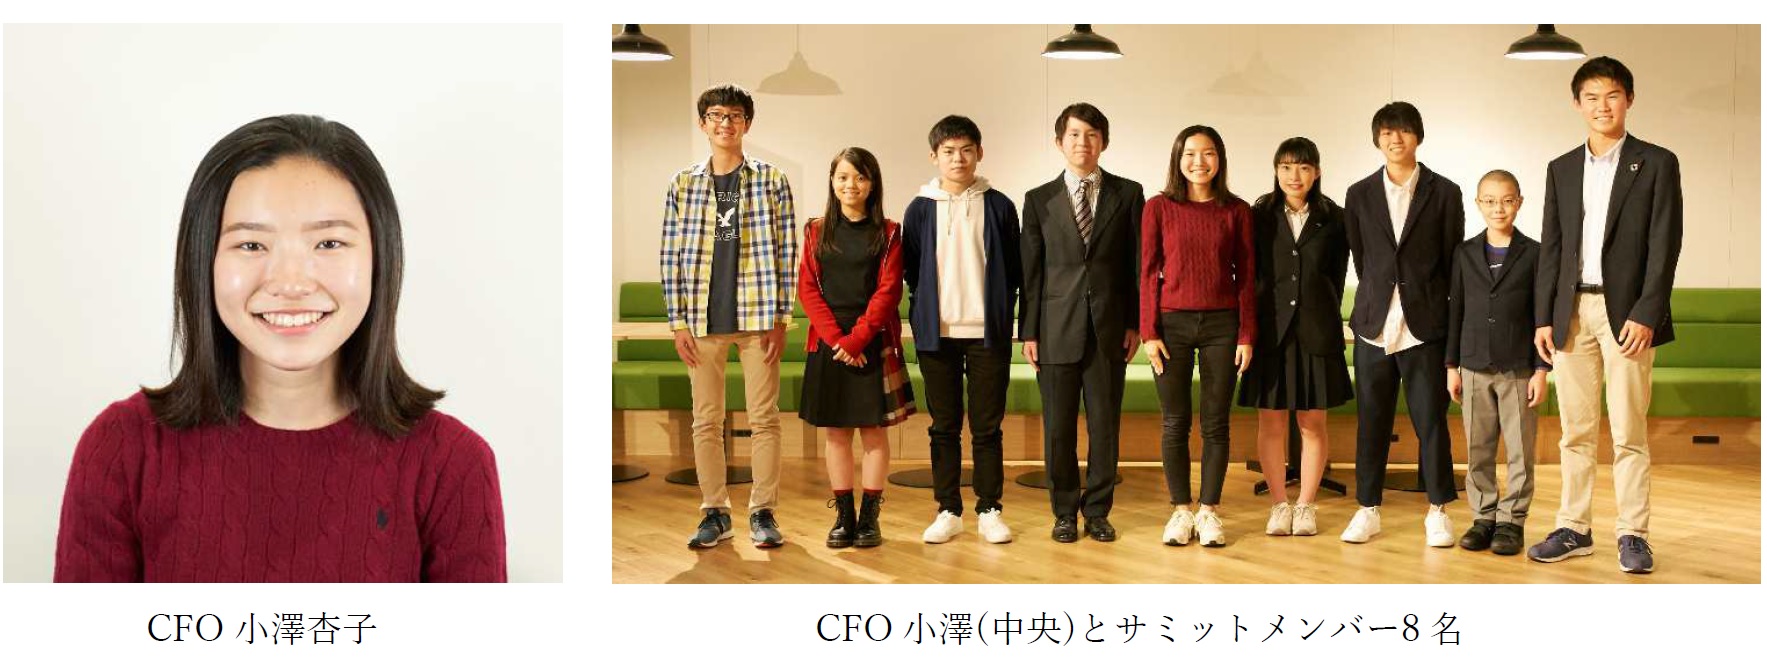 CFO小澤杏子&CFO小澤(中央)とサミットメンバー8名